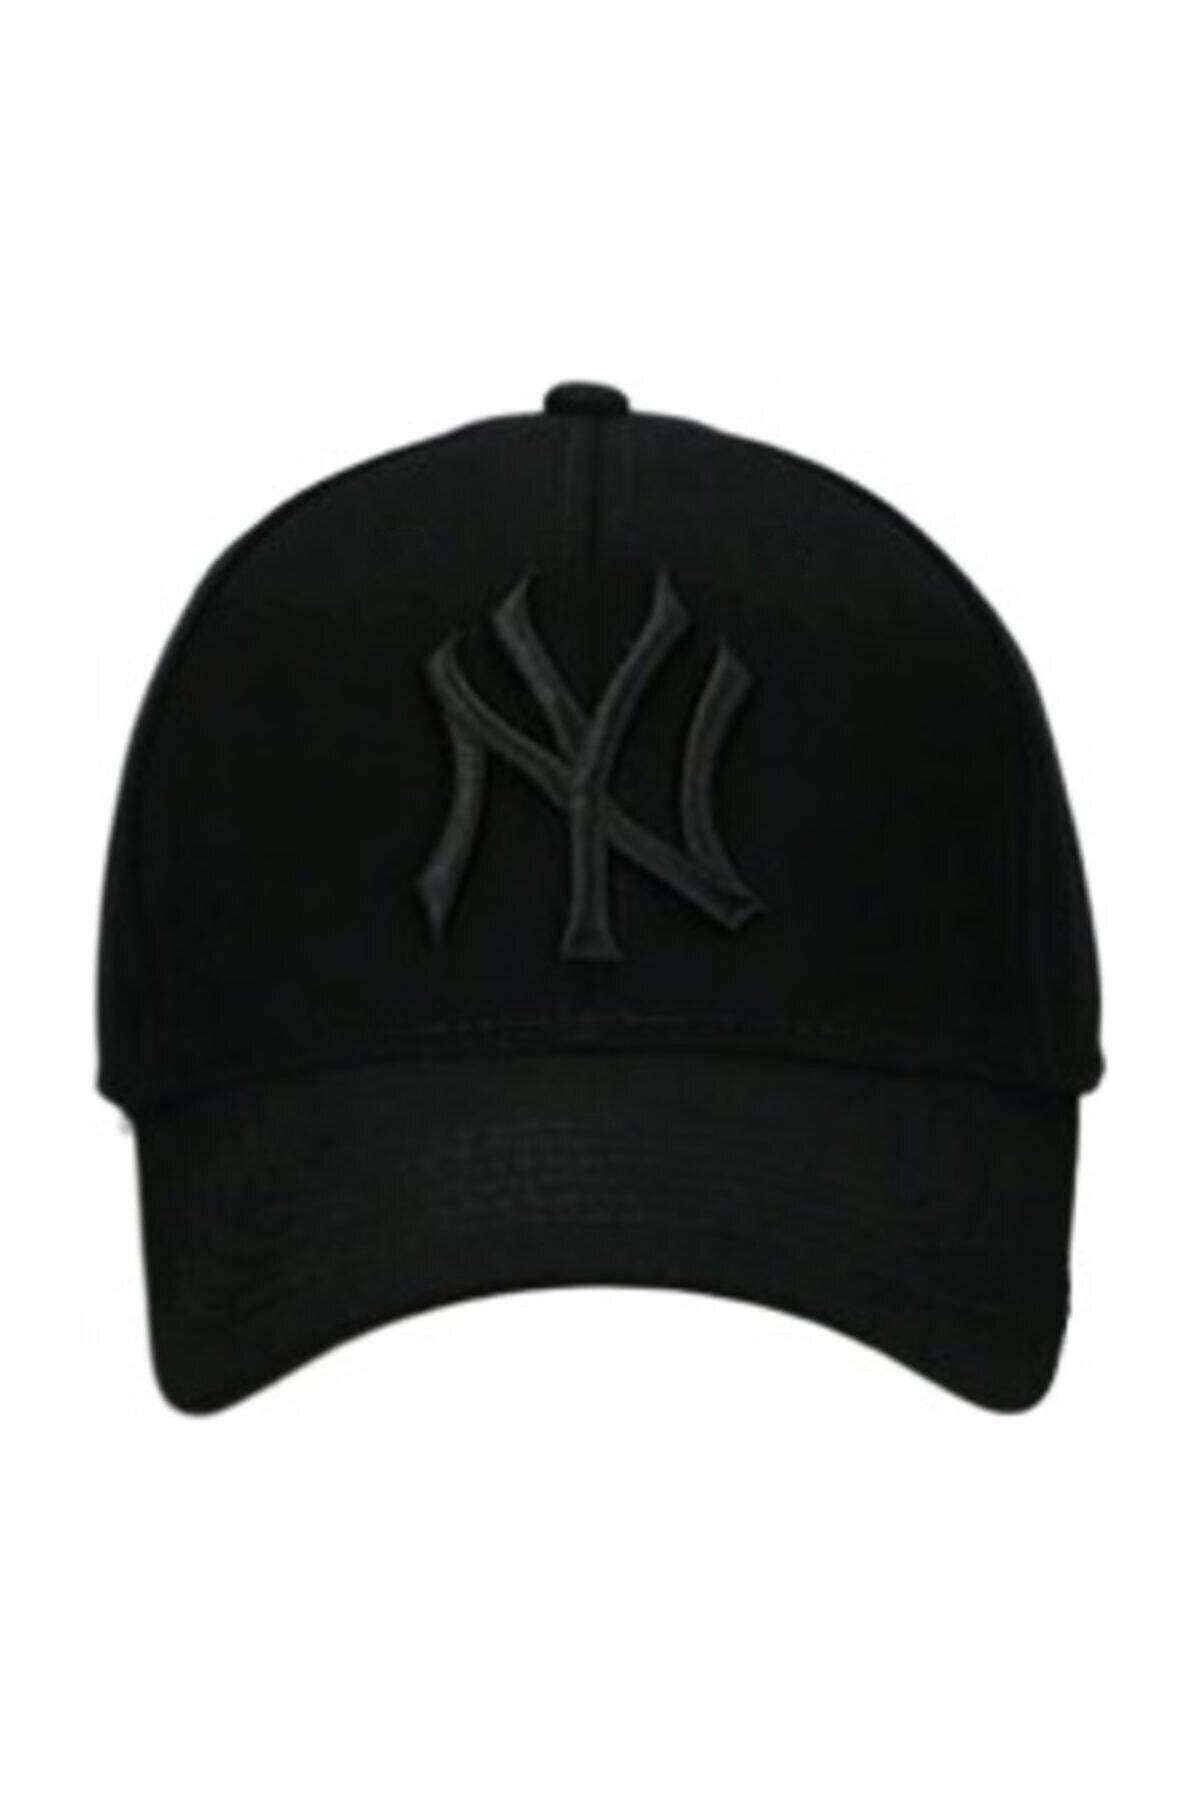 megalaksi Ny New York Unisex Siyah Şapka